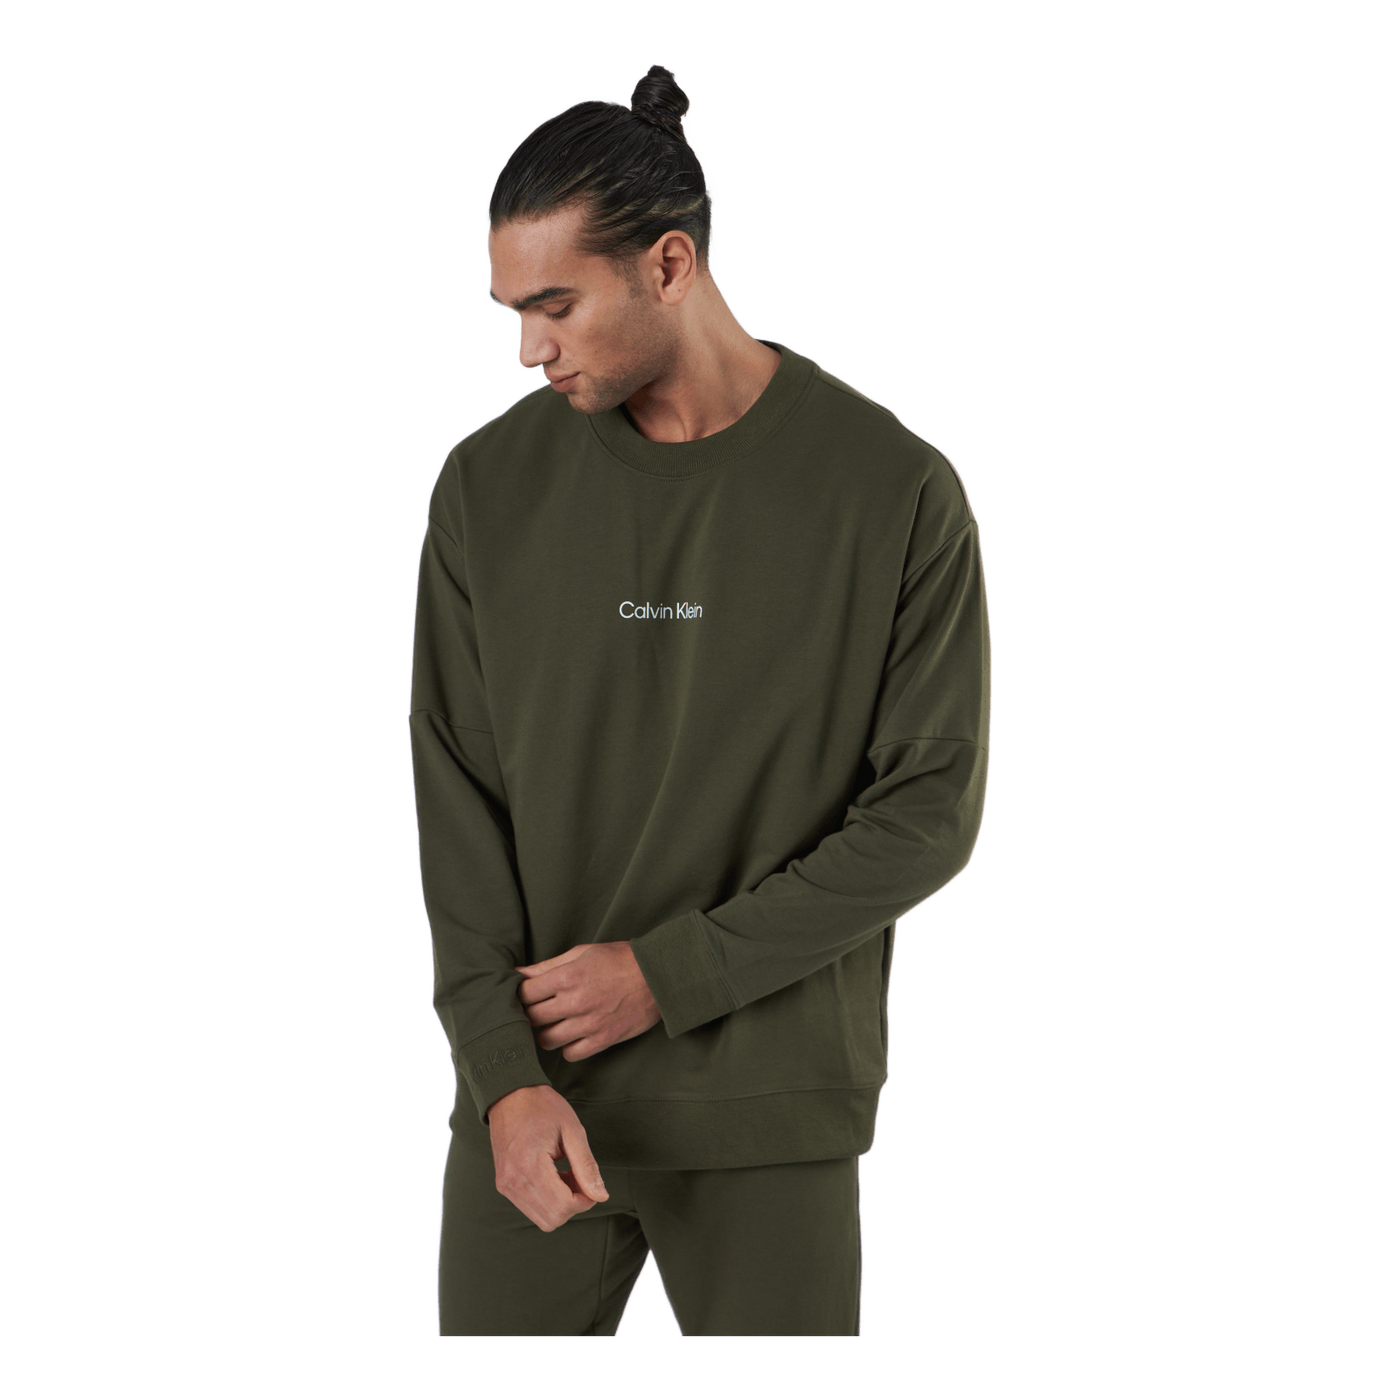 L/s Sweatshirt Army Green